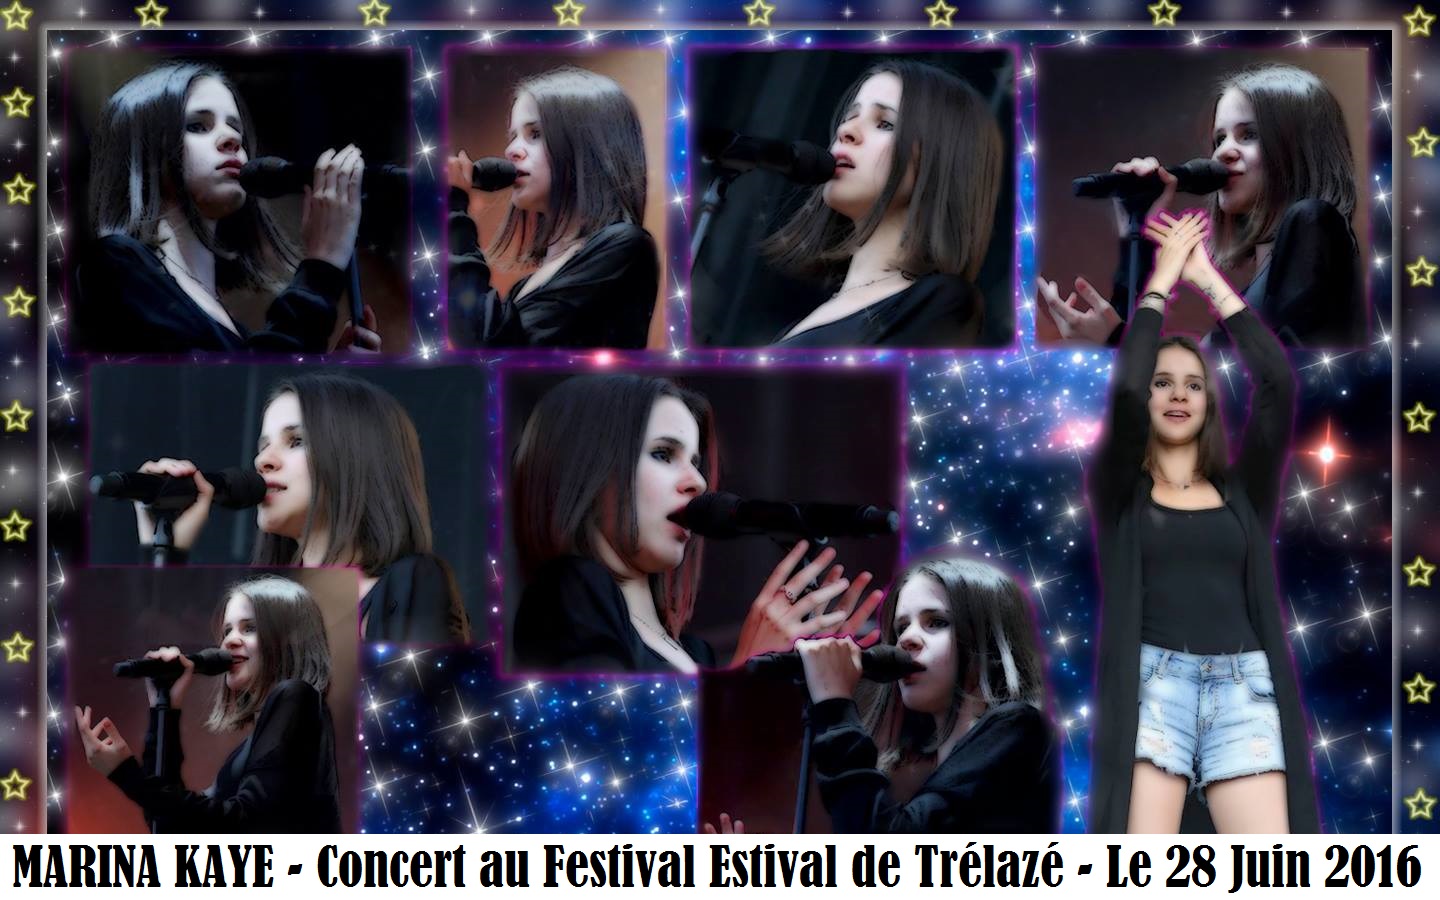 Concert de Marina à Trélazé (Festival)